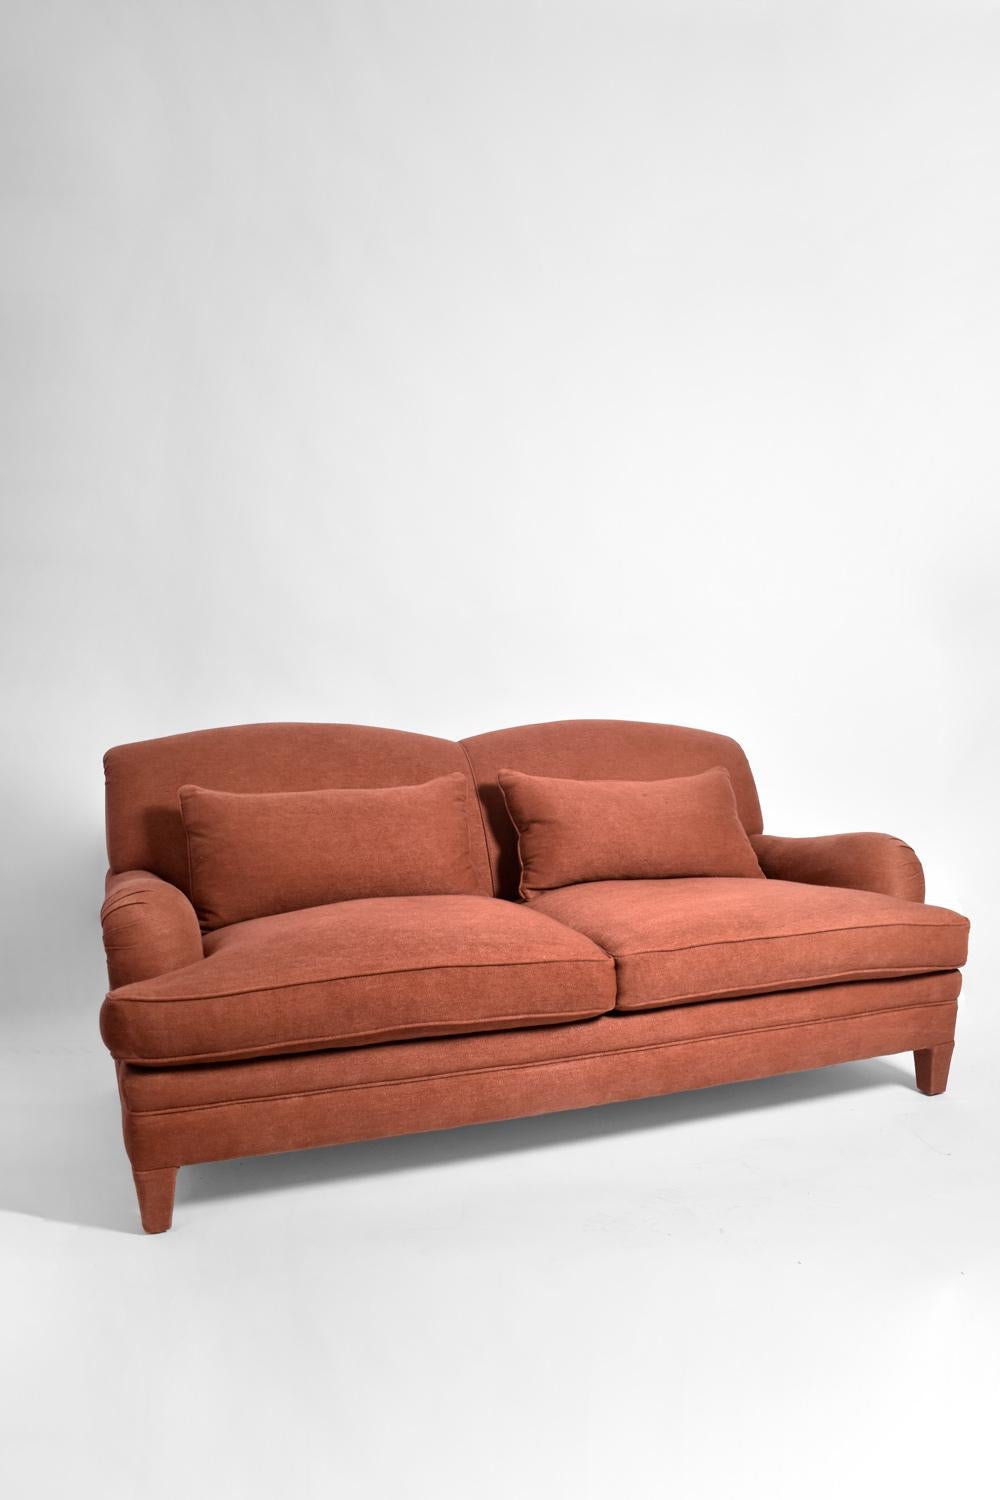 1940s sofa